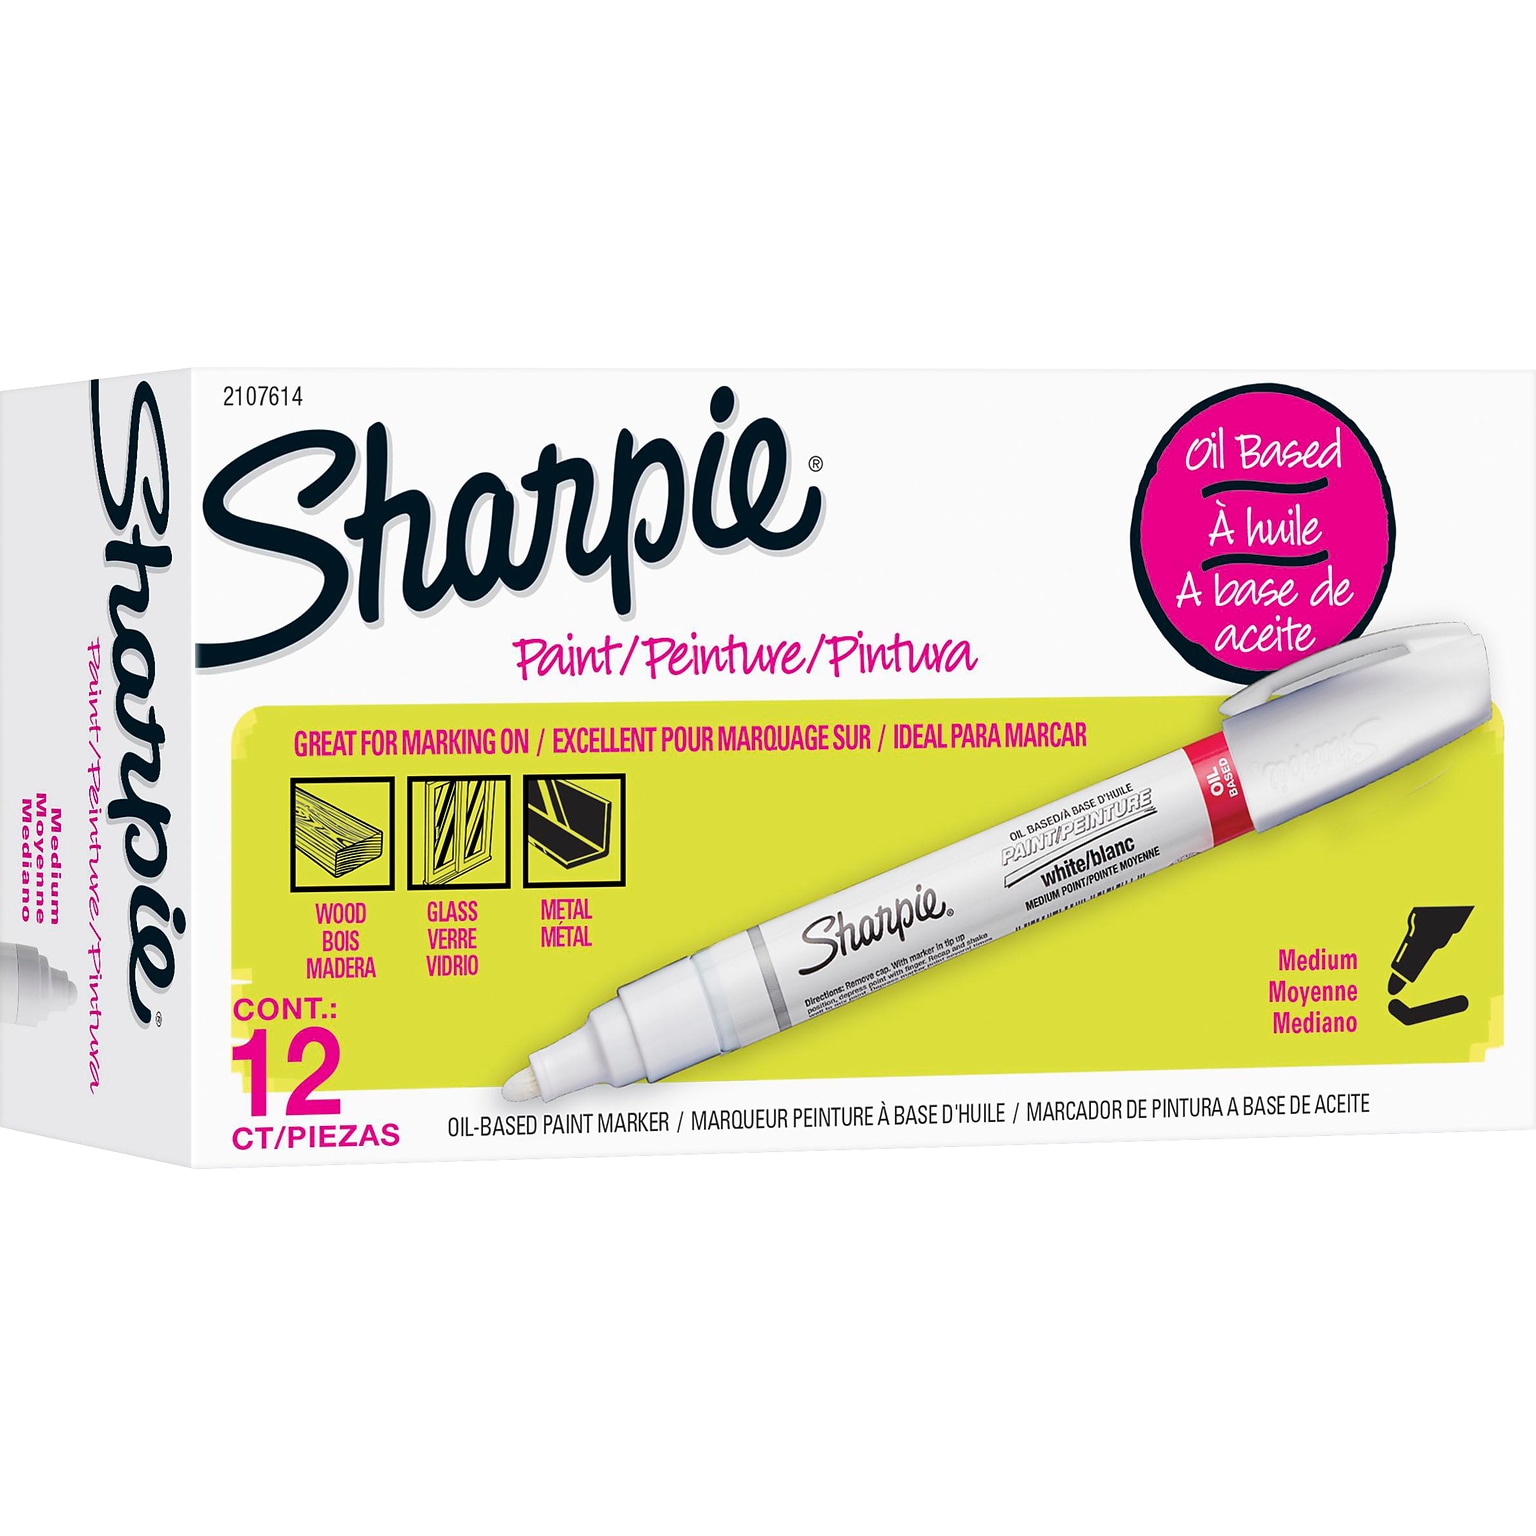 Sharpie Tank Paint Marker, Medium Tip, White, 12/Pack (2107614)